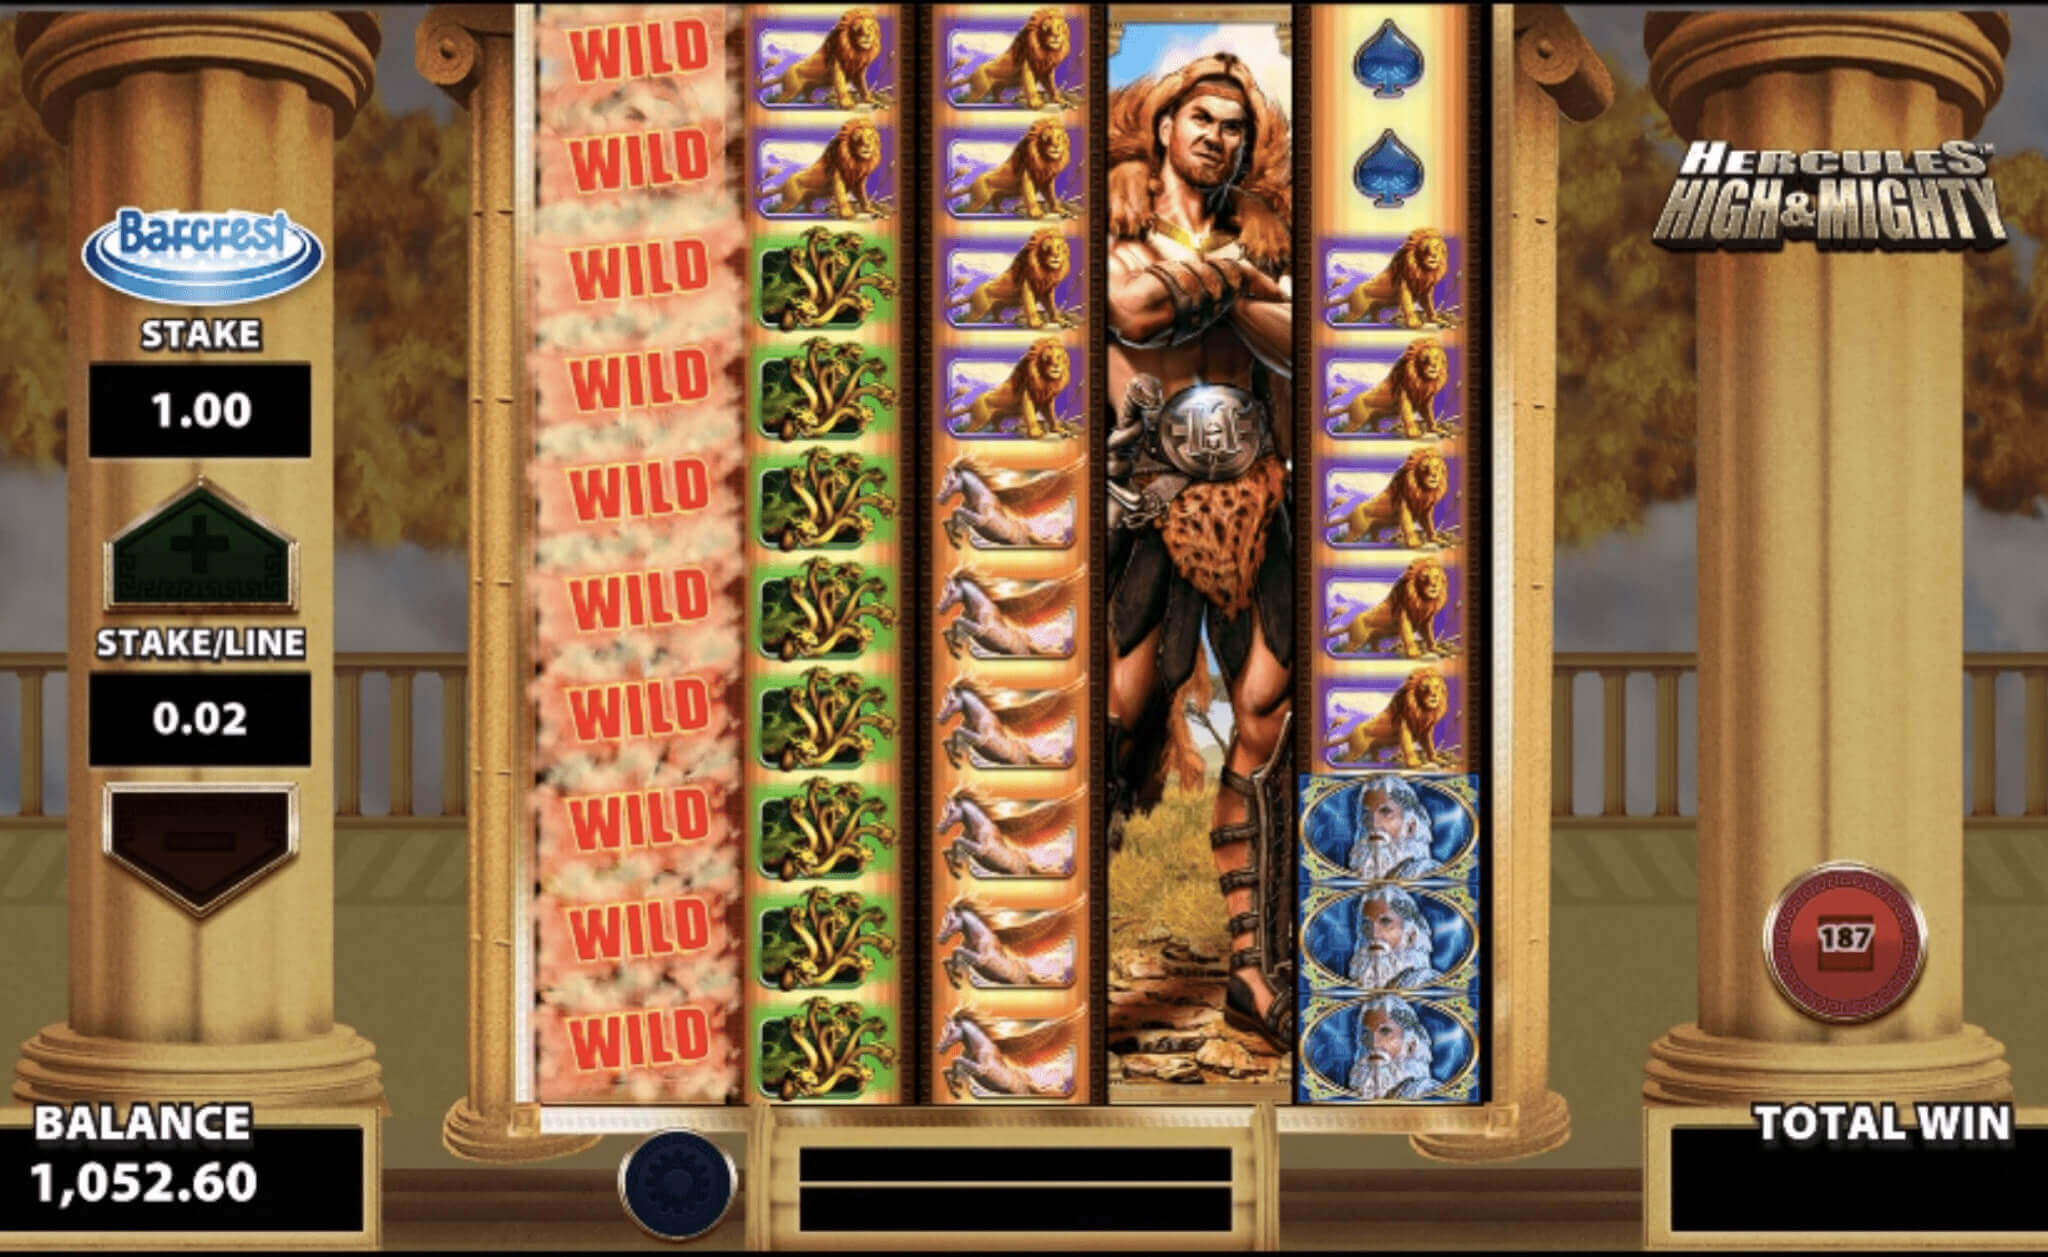 Hercules High and Mighty Slot Bonus